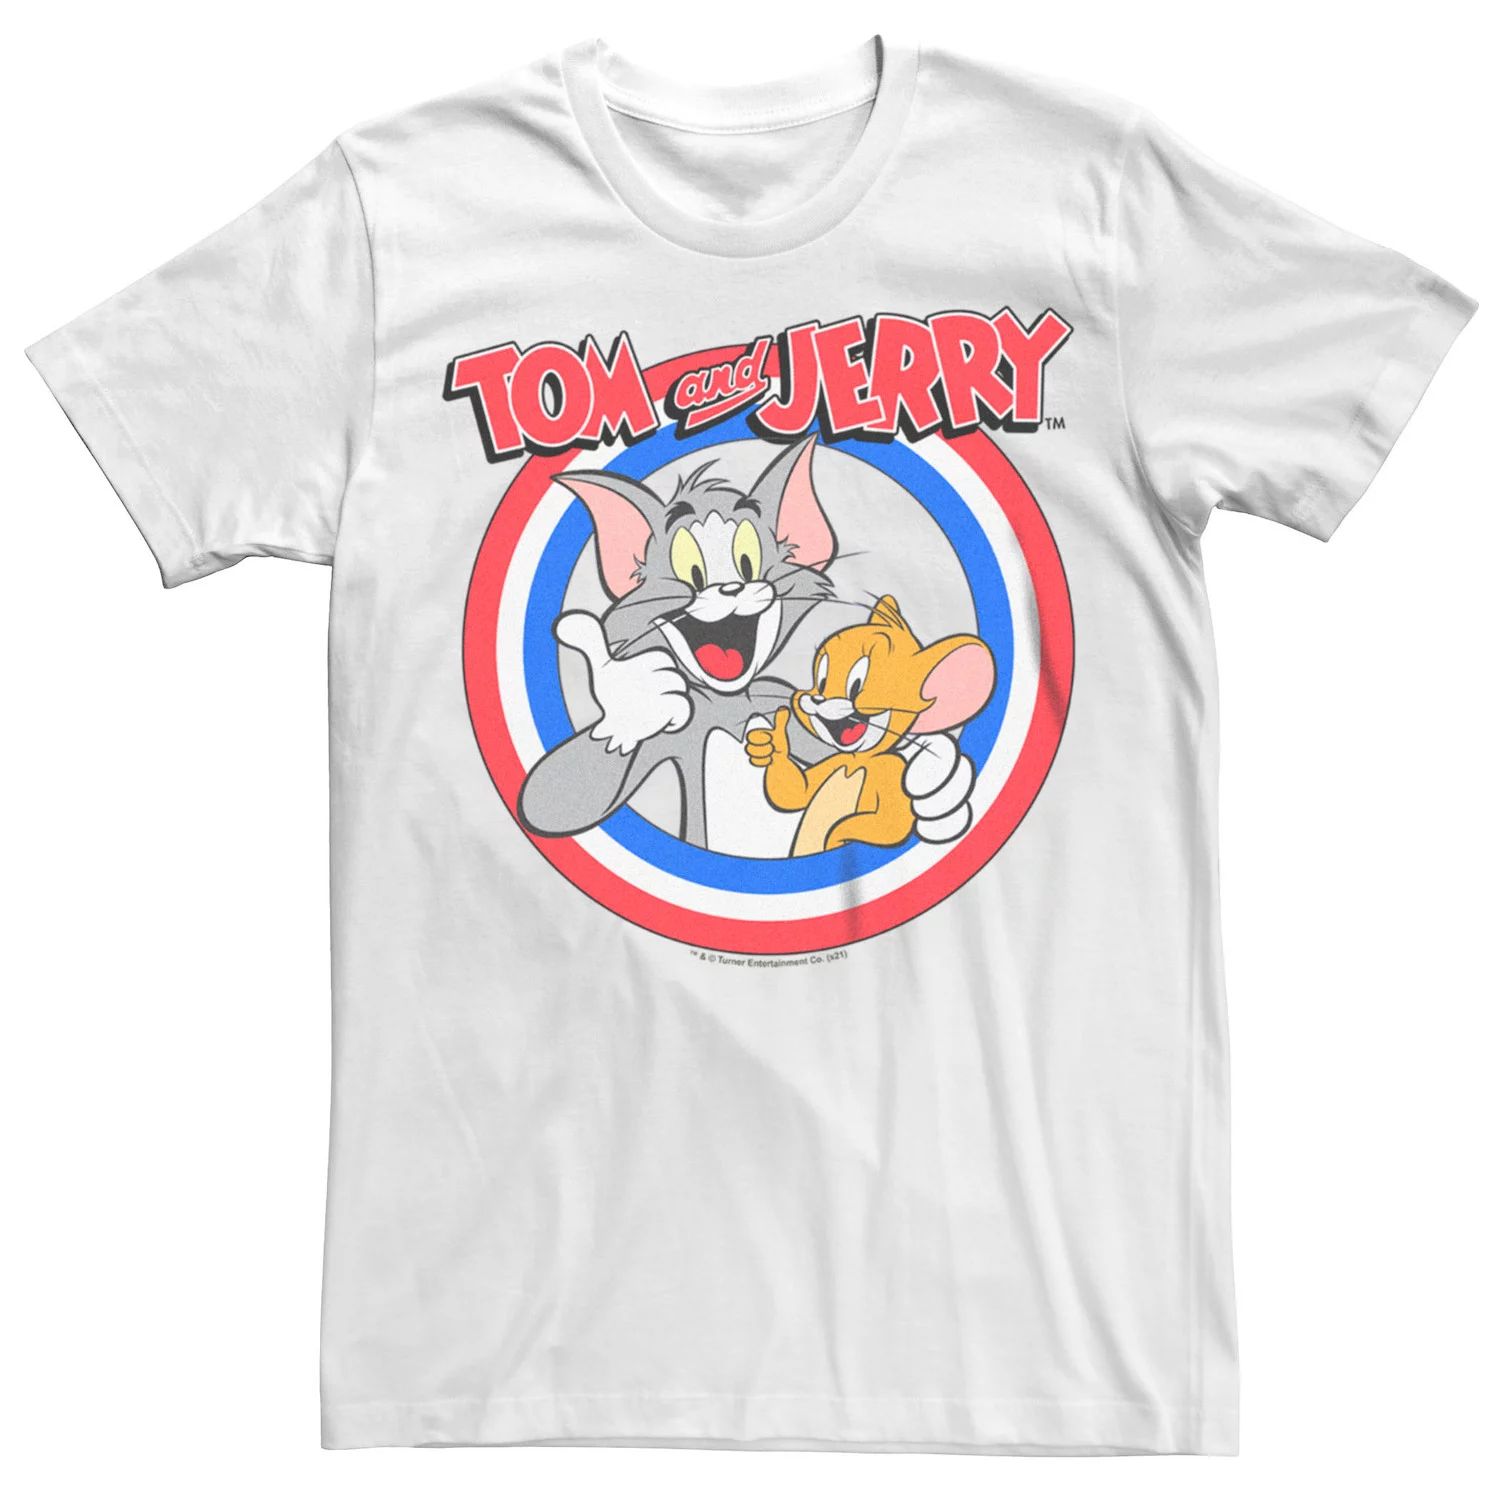 Мужская футболка с логотипом Tom & Jerry Americana Tom And Jerry Licensed Character